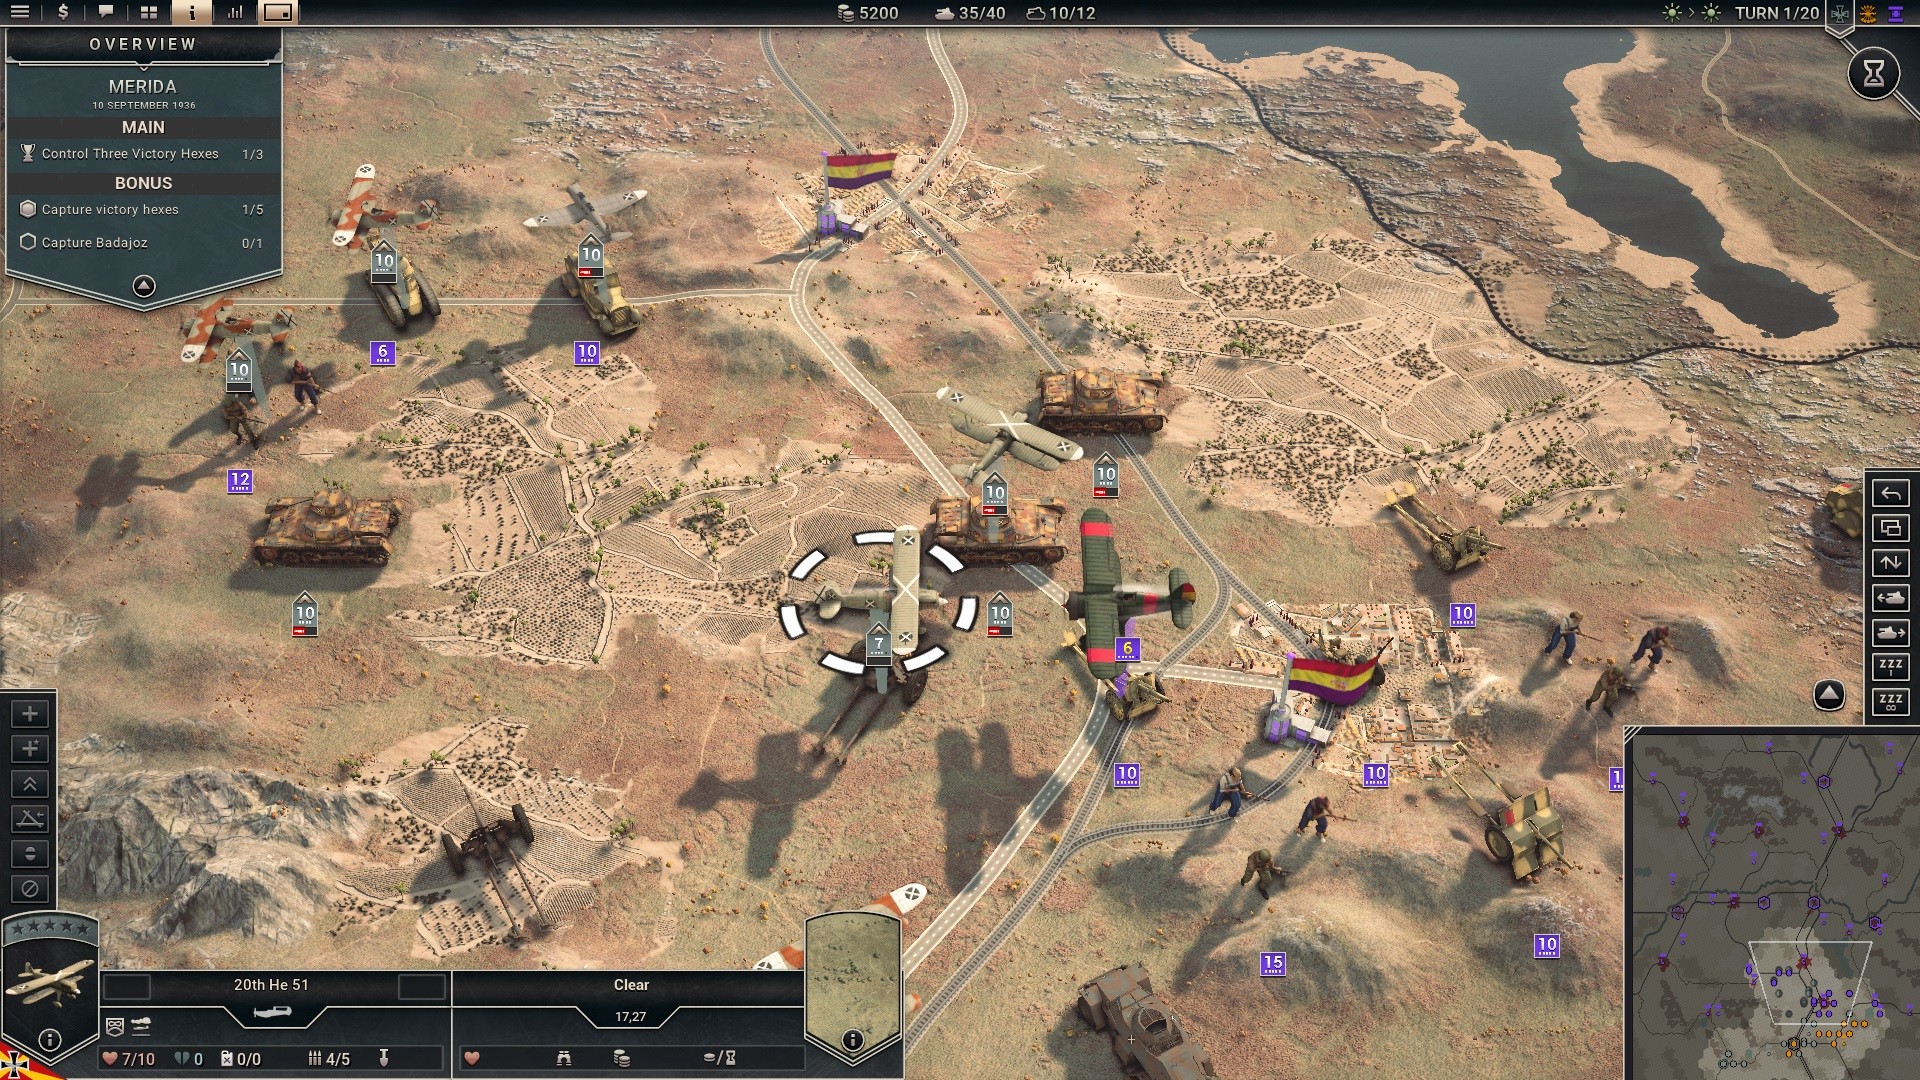 Panzer Corps 2: Axis Operations - Spanish Civil War DLC Steam CD Key